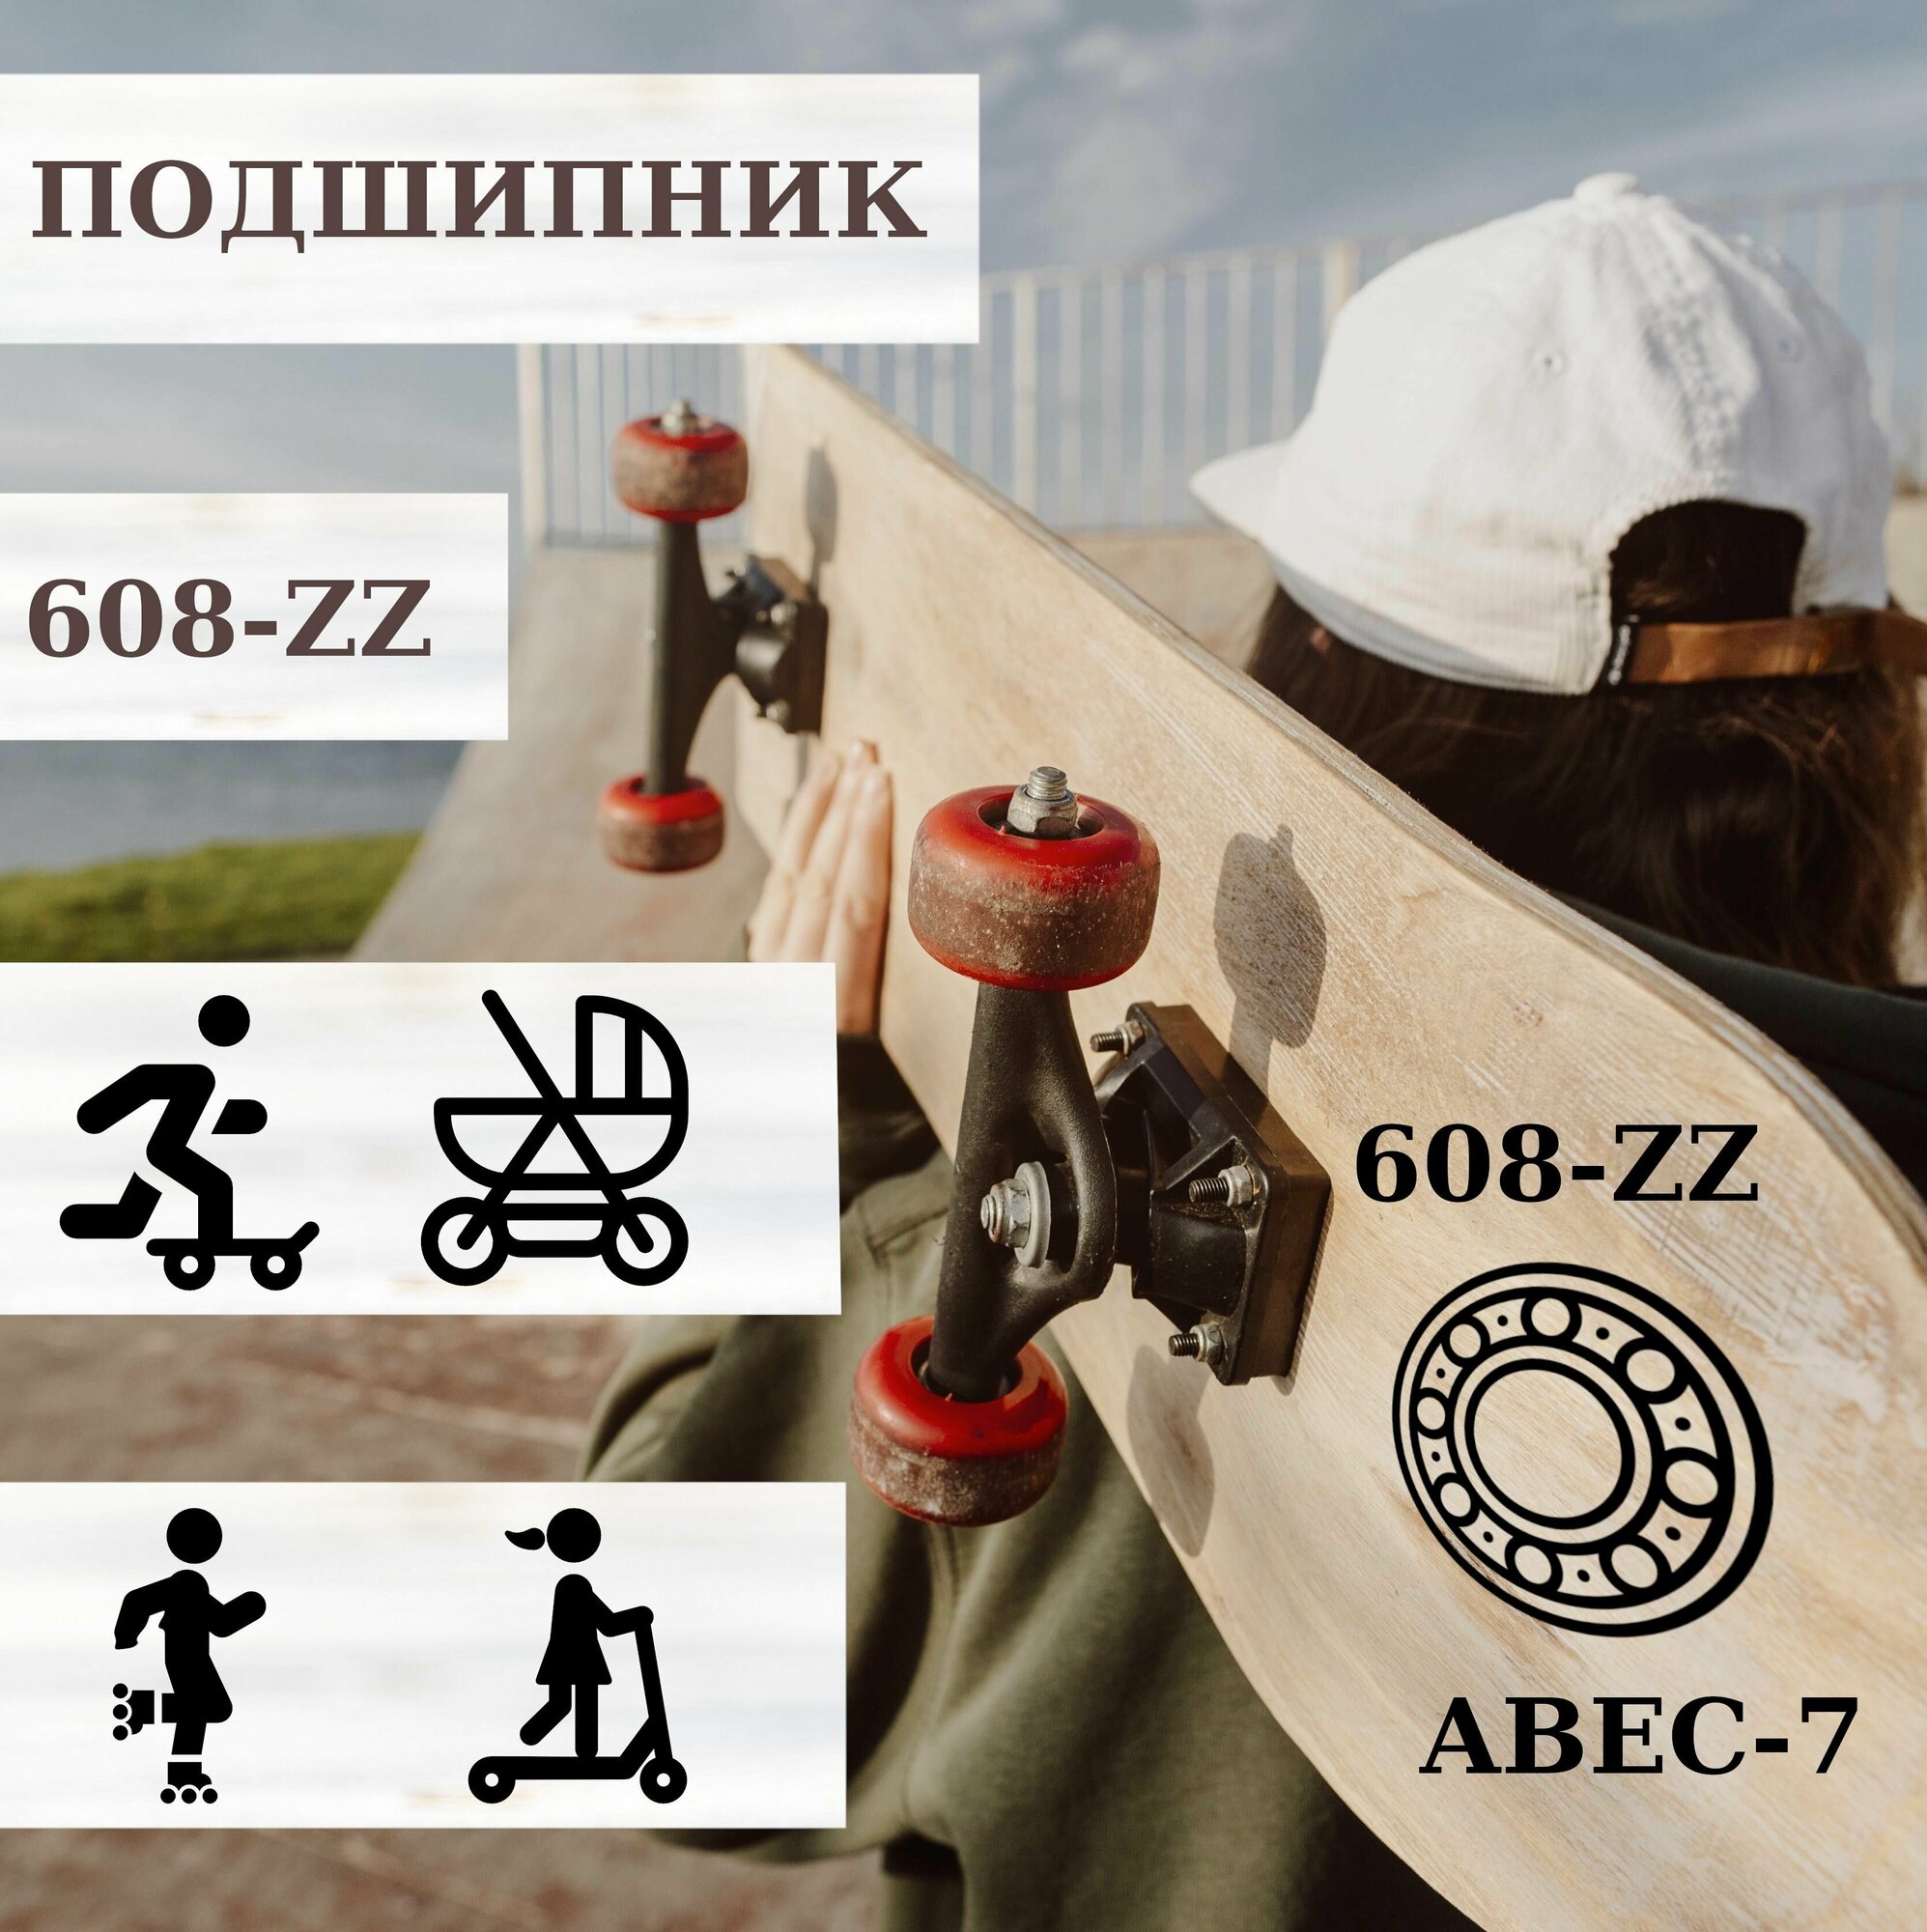 Подшипник 608-2Z 608ZZ (80018) 6082Z. (4 шт.). Для самокатов роликов скейтбордов. ABEC-7